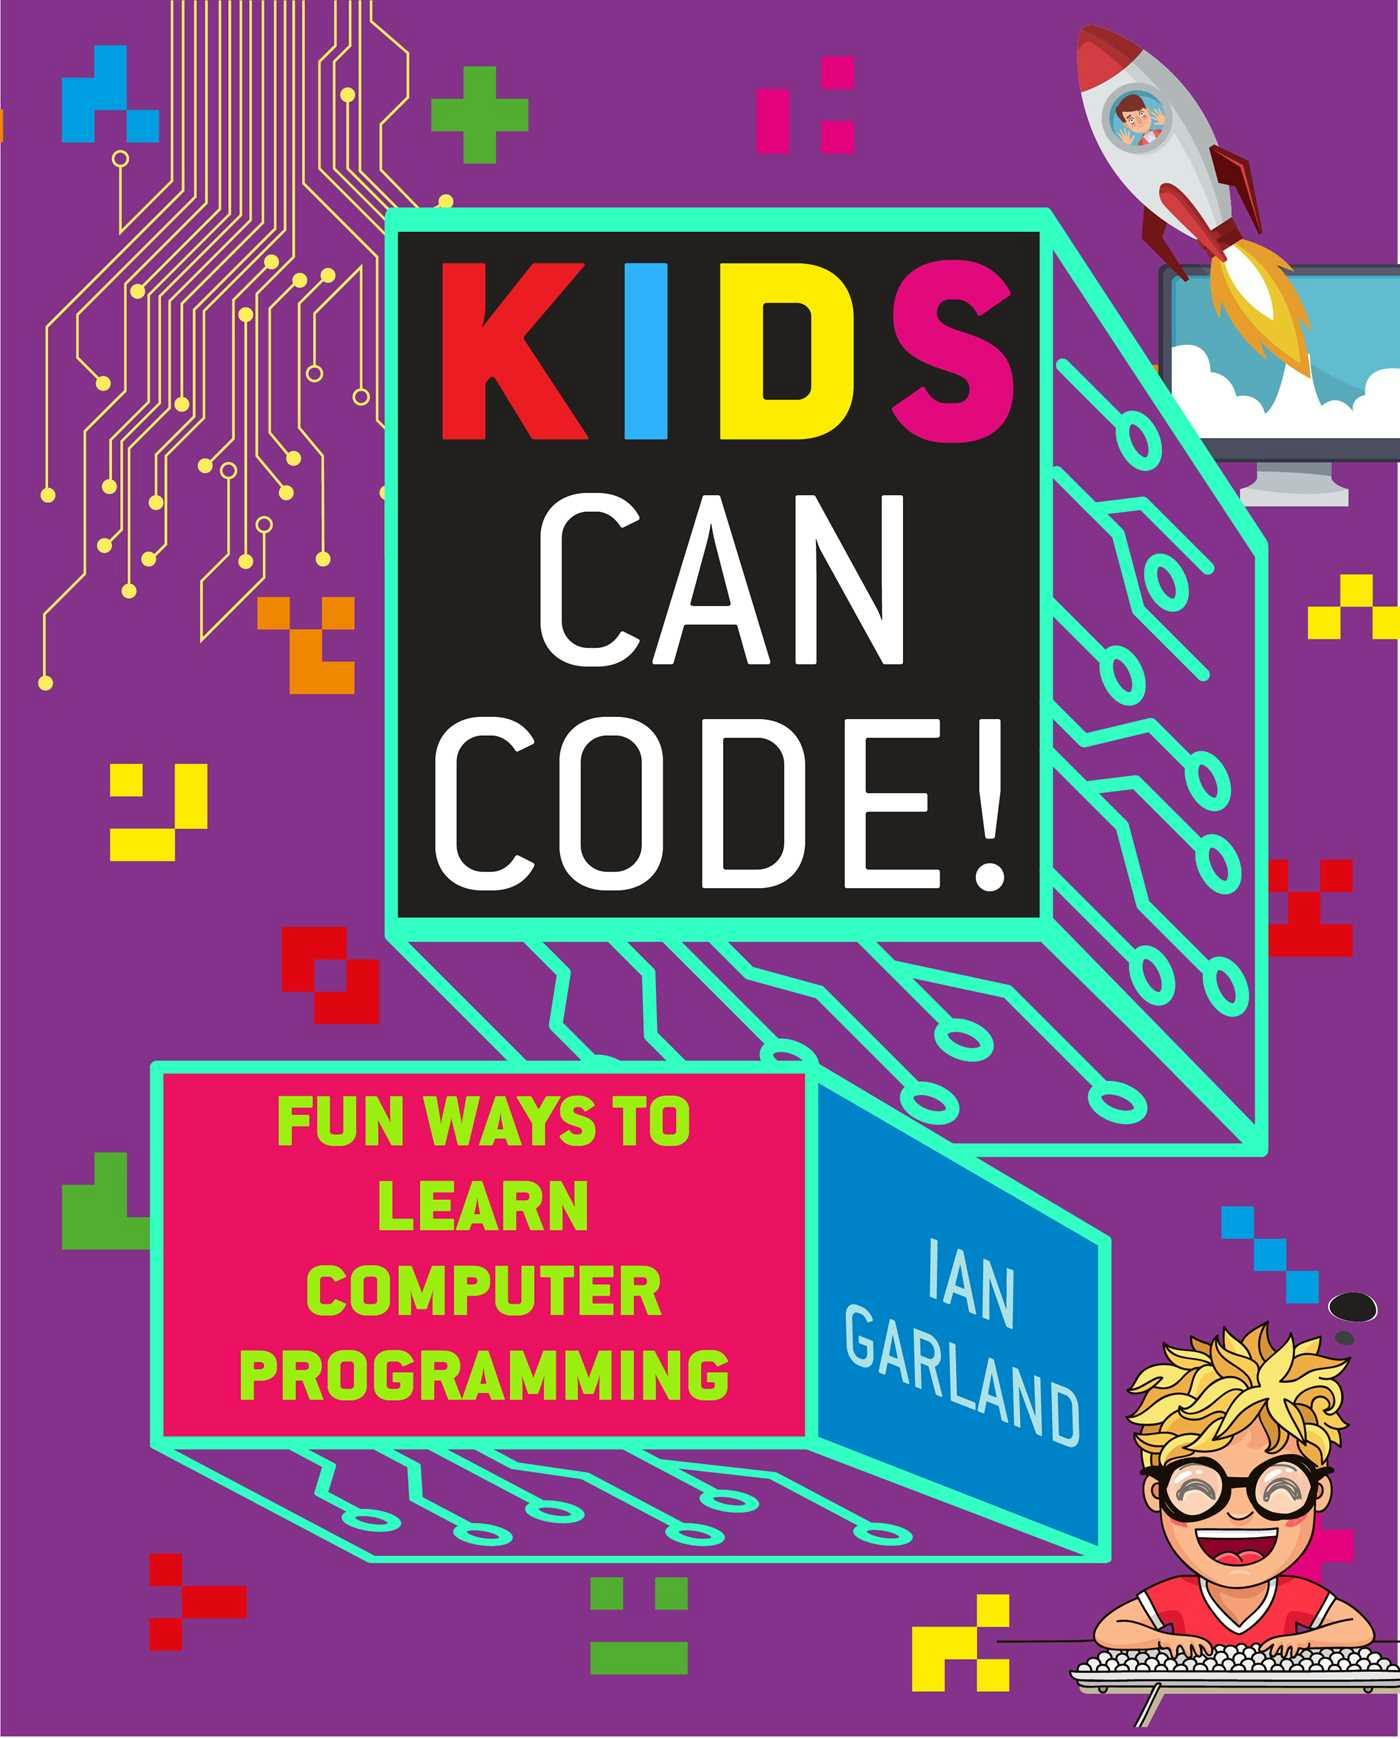 Kids Can Code!: Fun Ways to Learn Computer Programming - Ian Garland